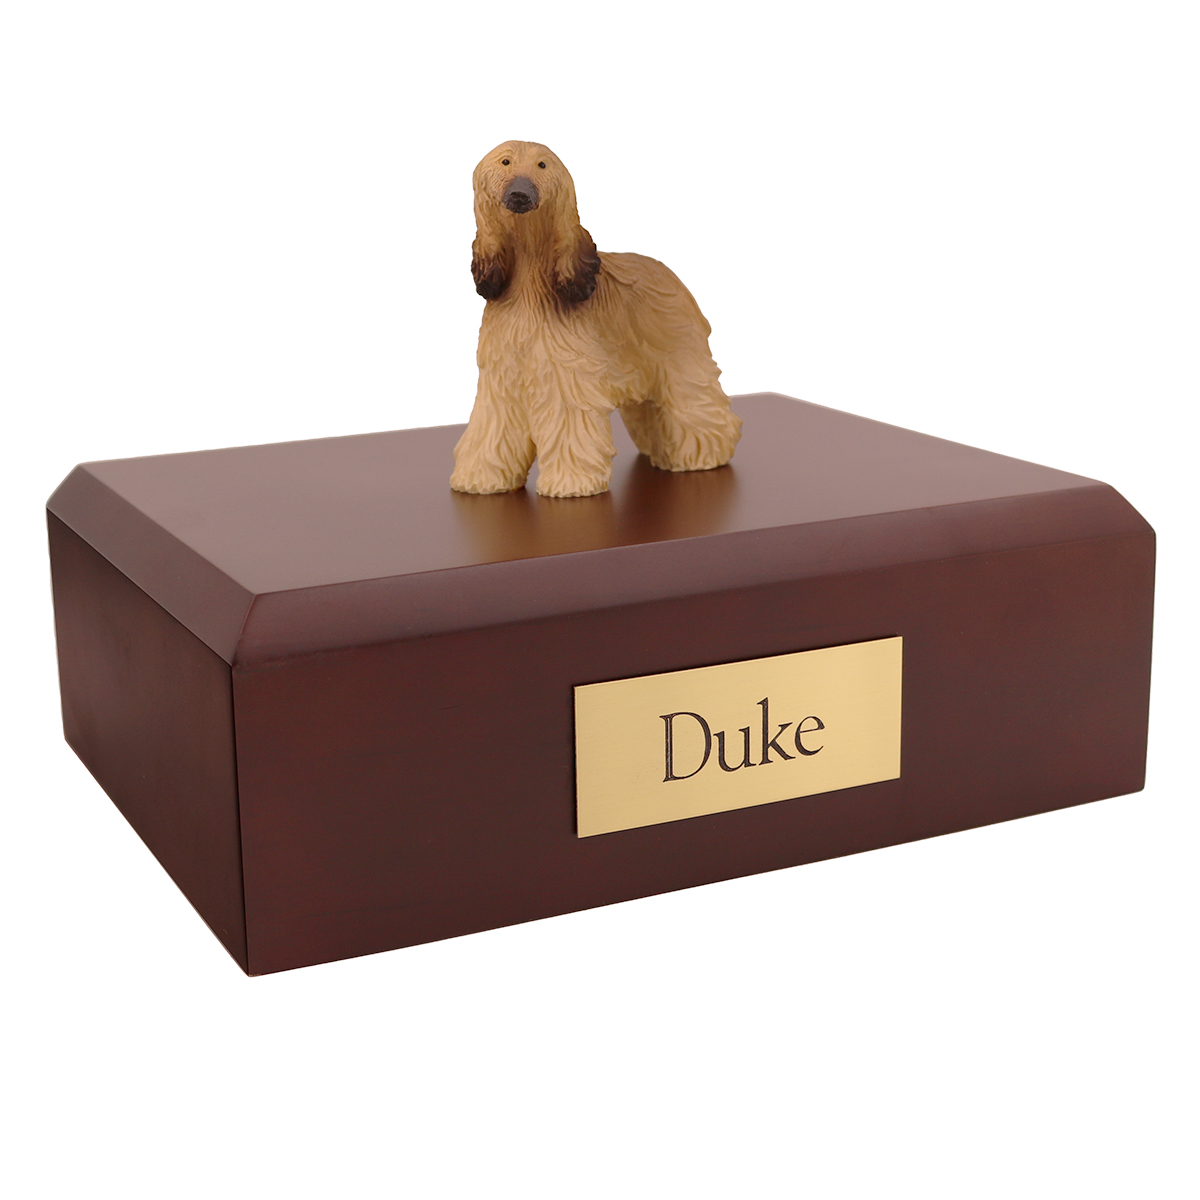 Dog, Afghan Hound - Figurine Urn